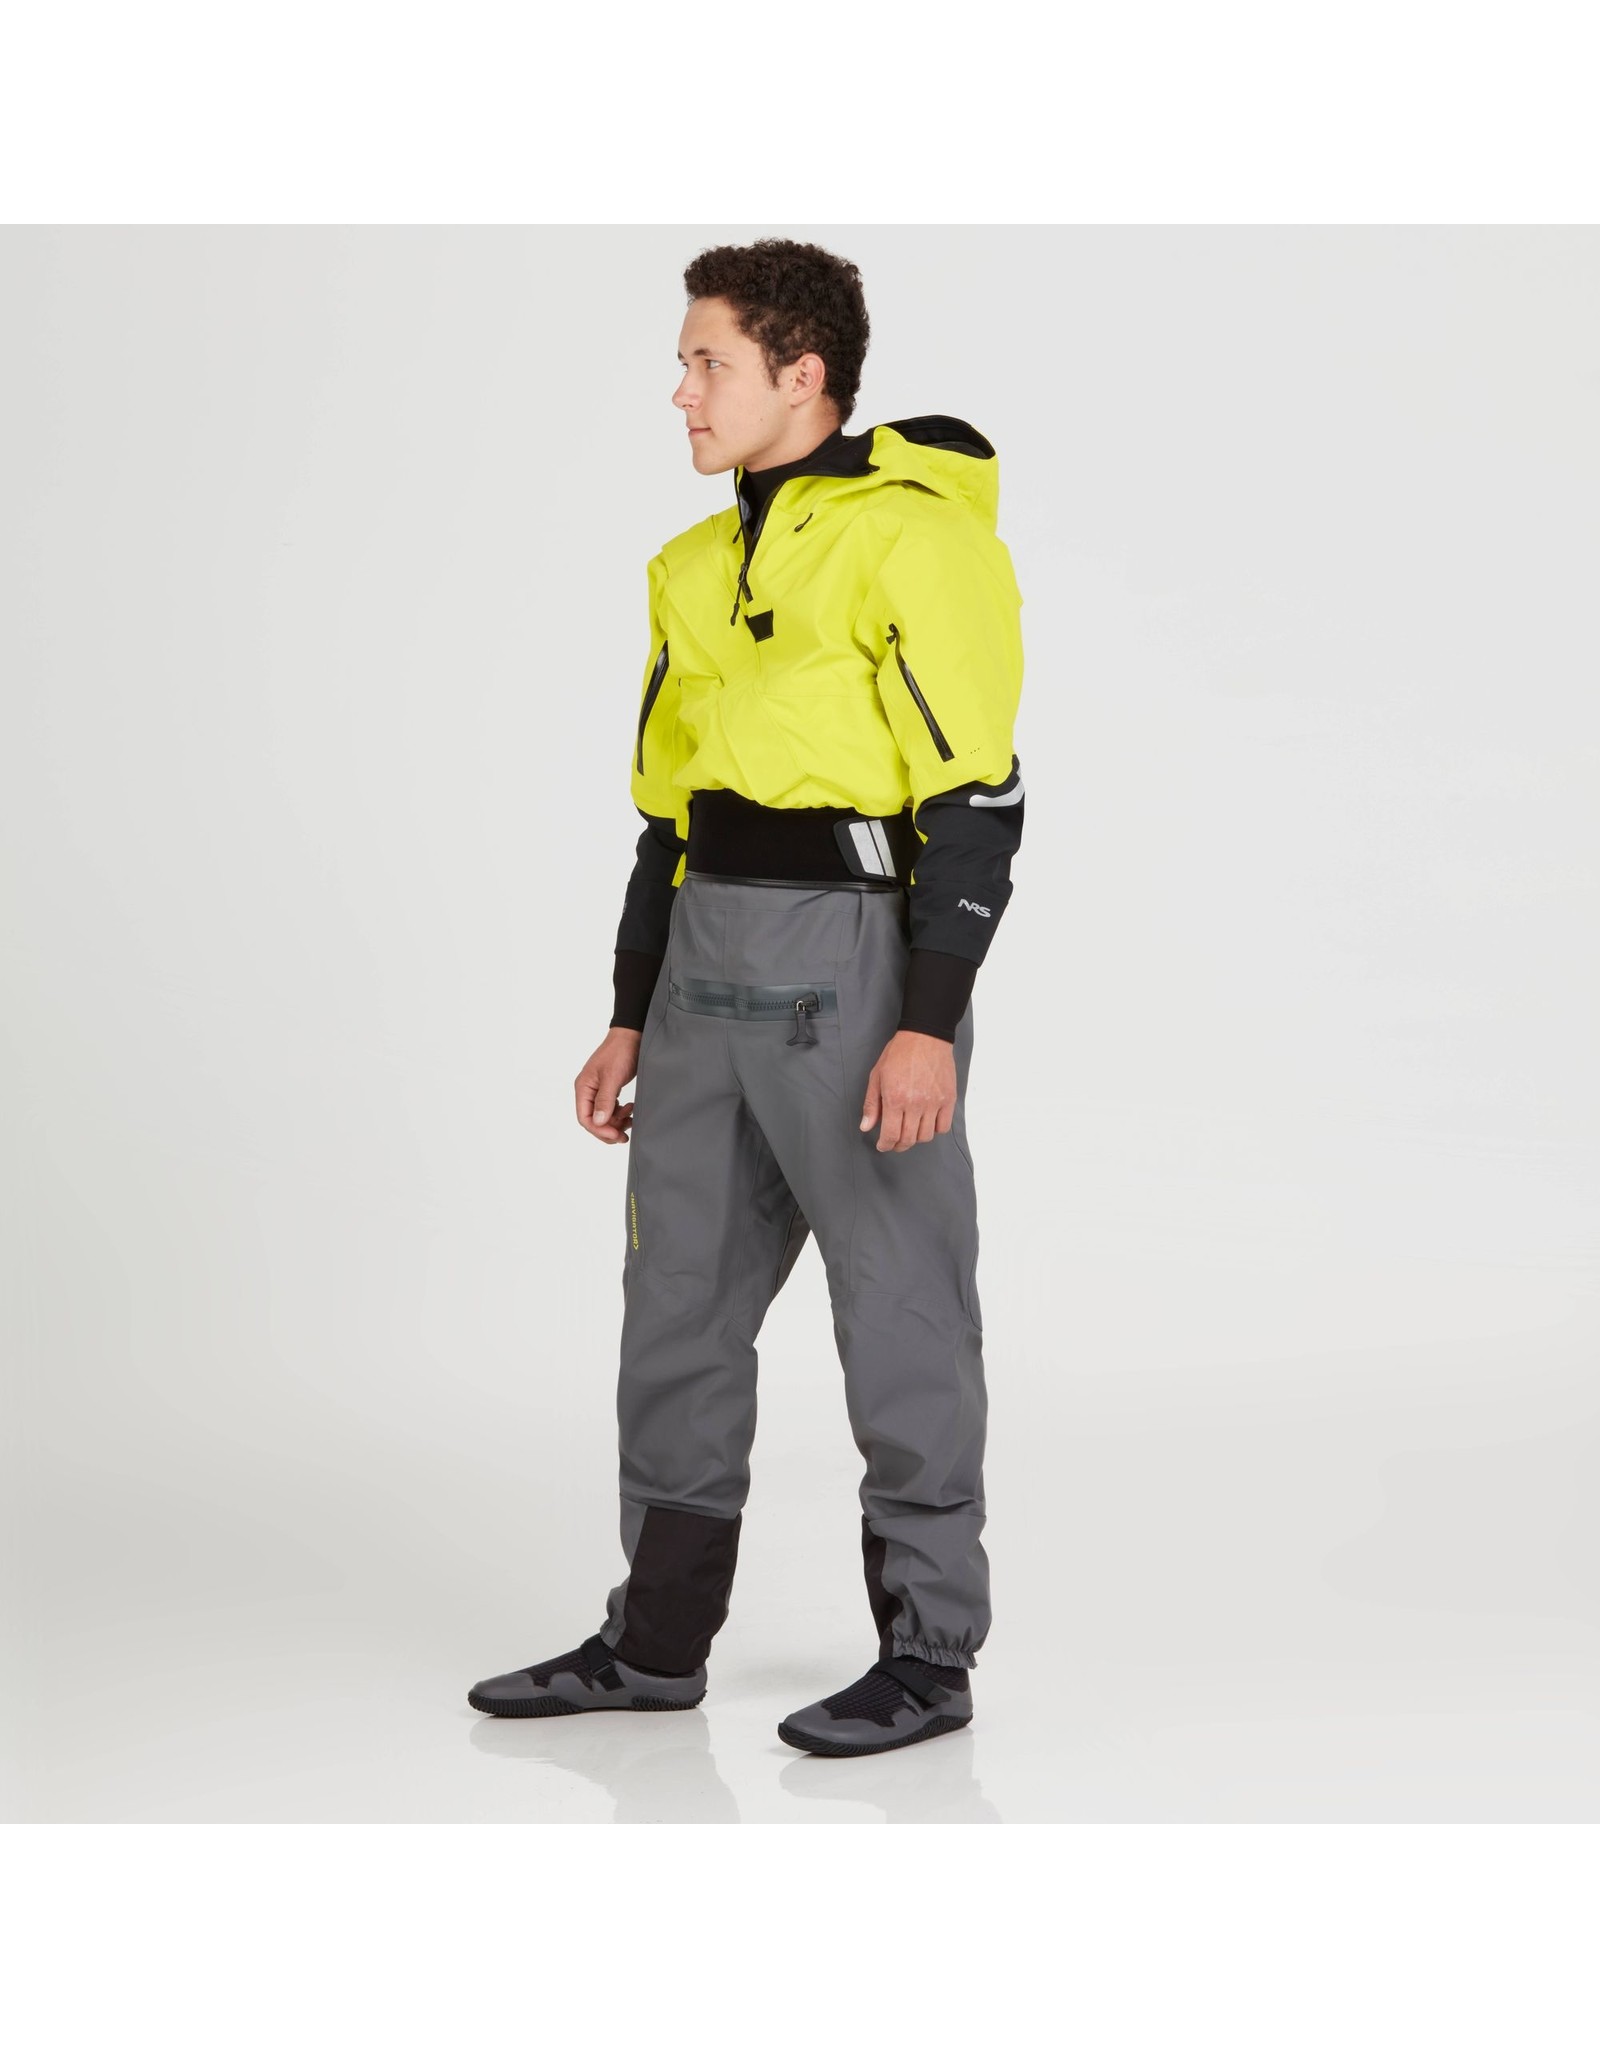 NRS NRS Men's Navigator Comfort-Neck Dry Suit